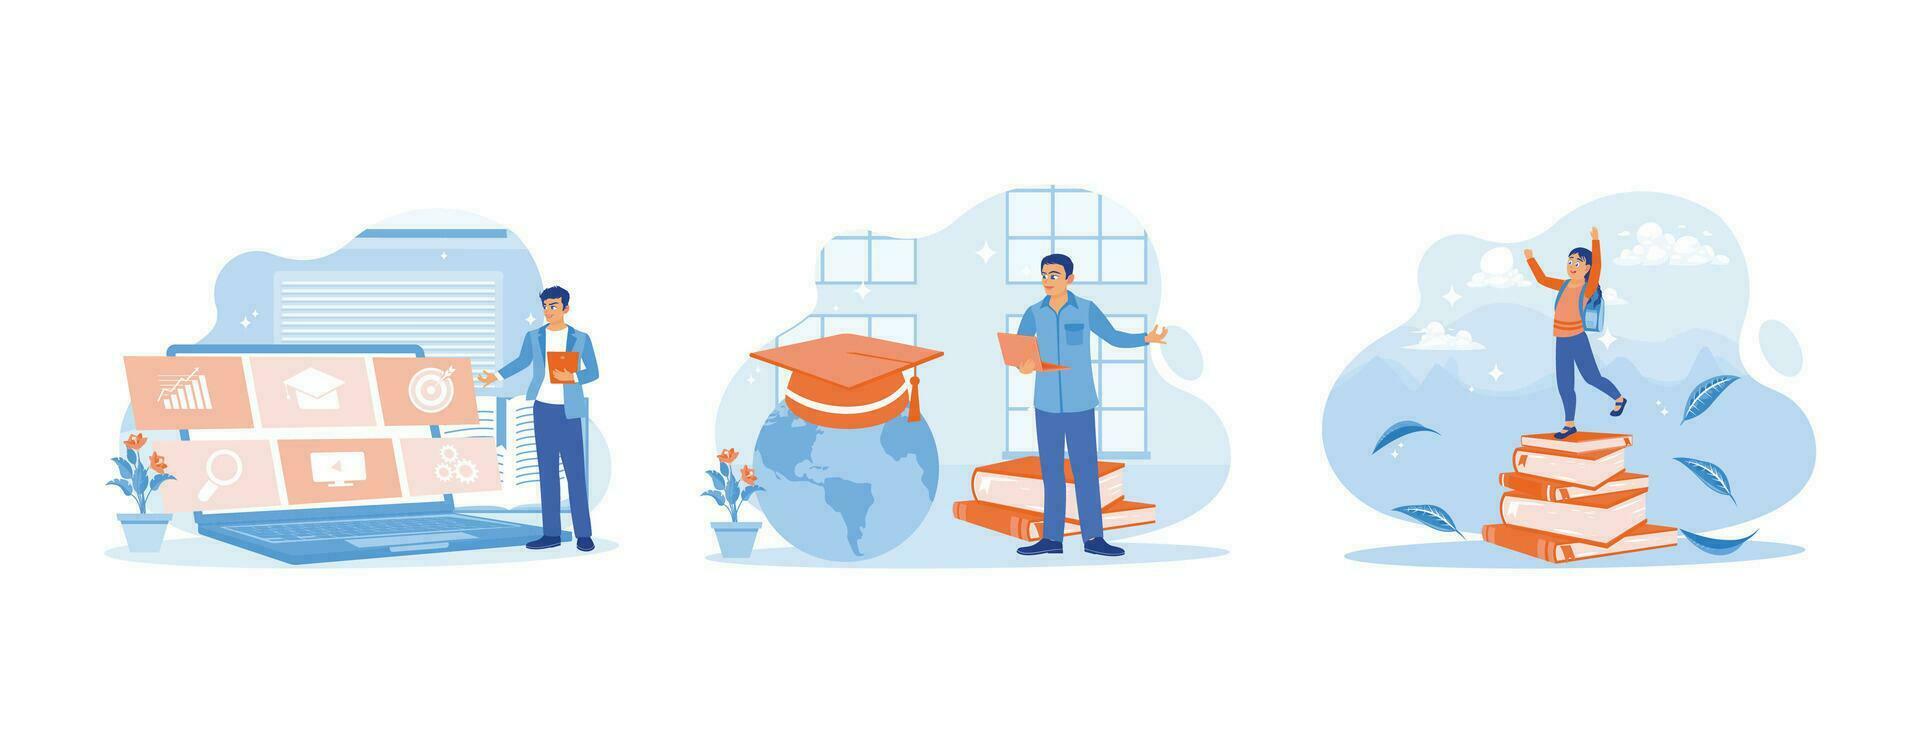 distancia educación Internet tecnología. graduación sombrero terminado globo mapa. educación concepto. conjunto tendencia moderno vector plano ilustración